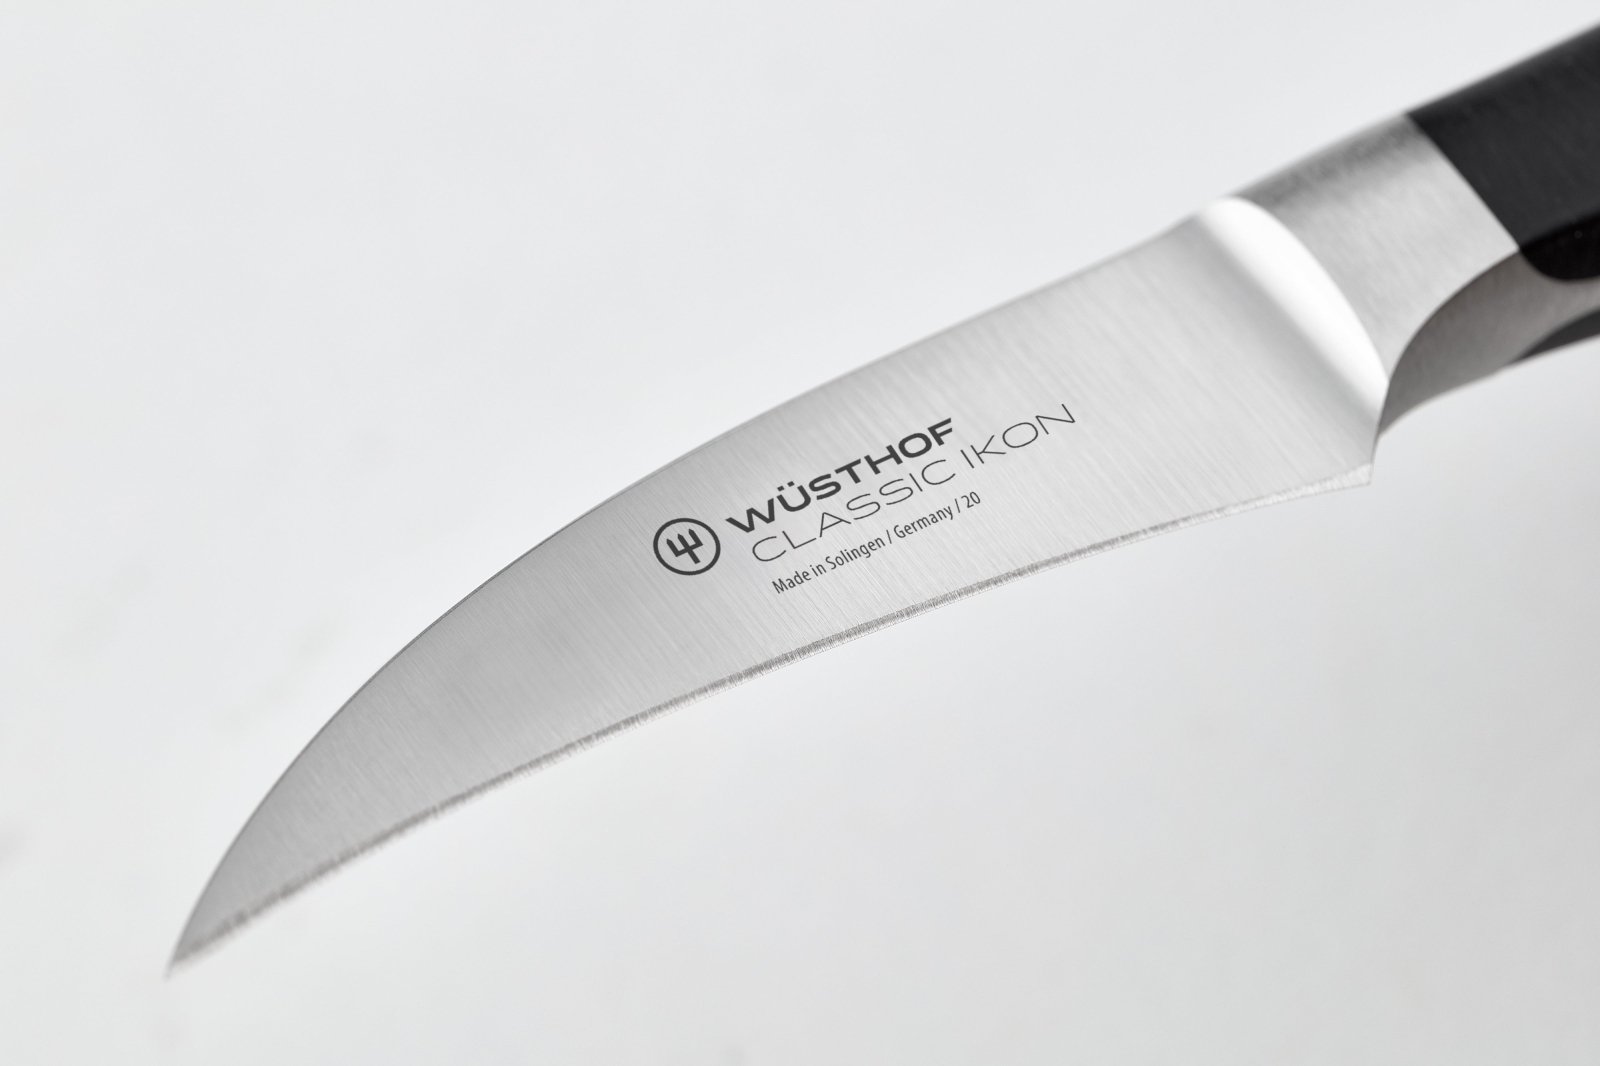 Wusthof Classic Ikon 7cm Peeling Knife - WT1040332207 - The Cotswold Knife Company